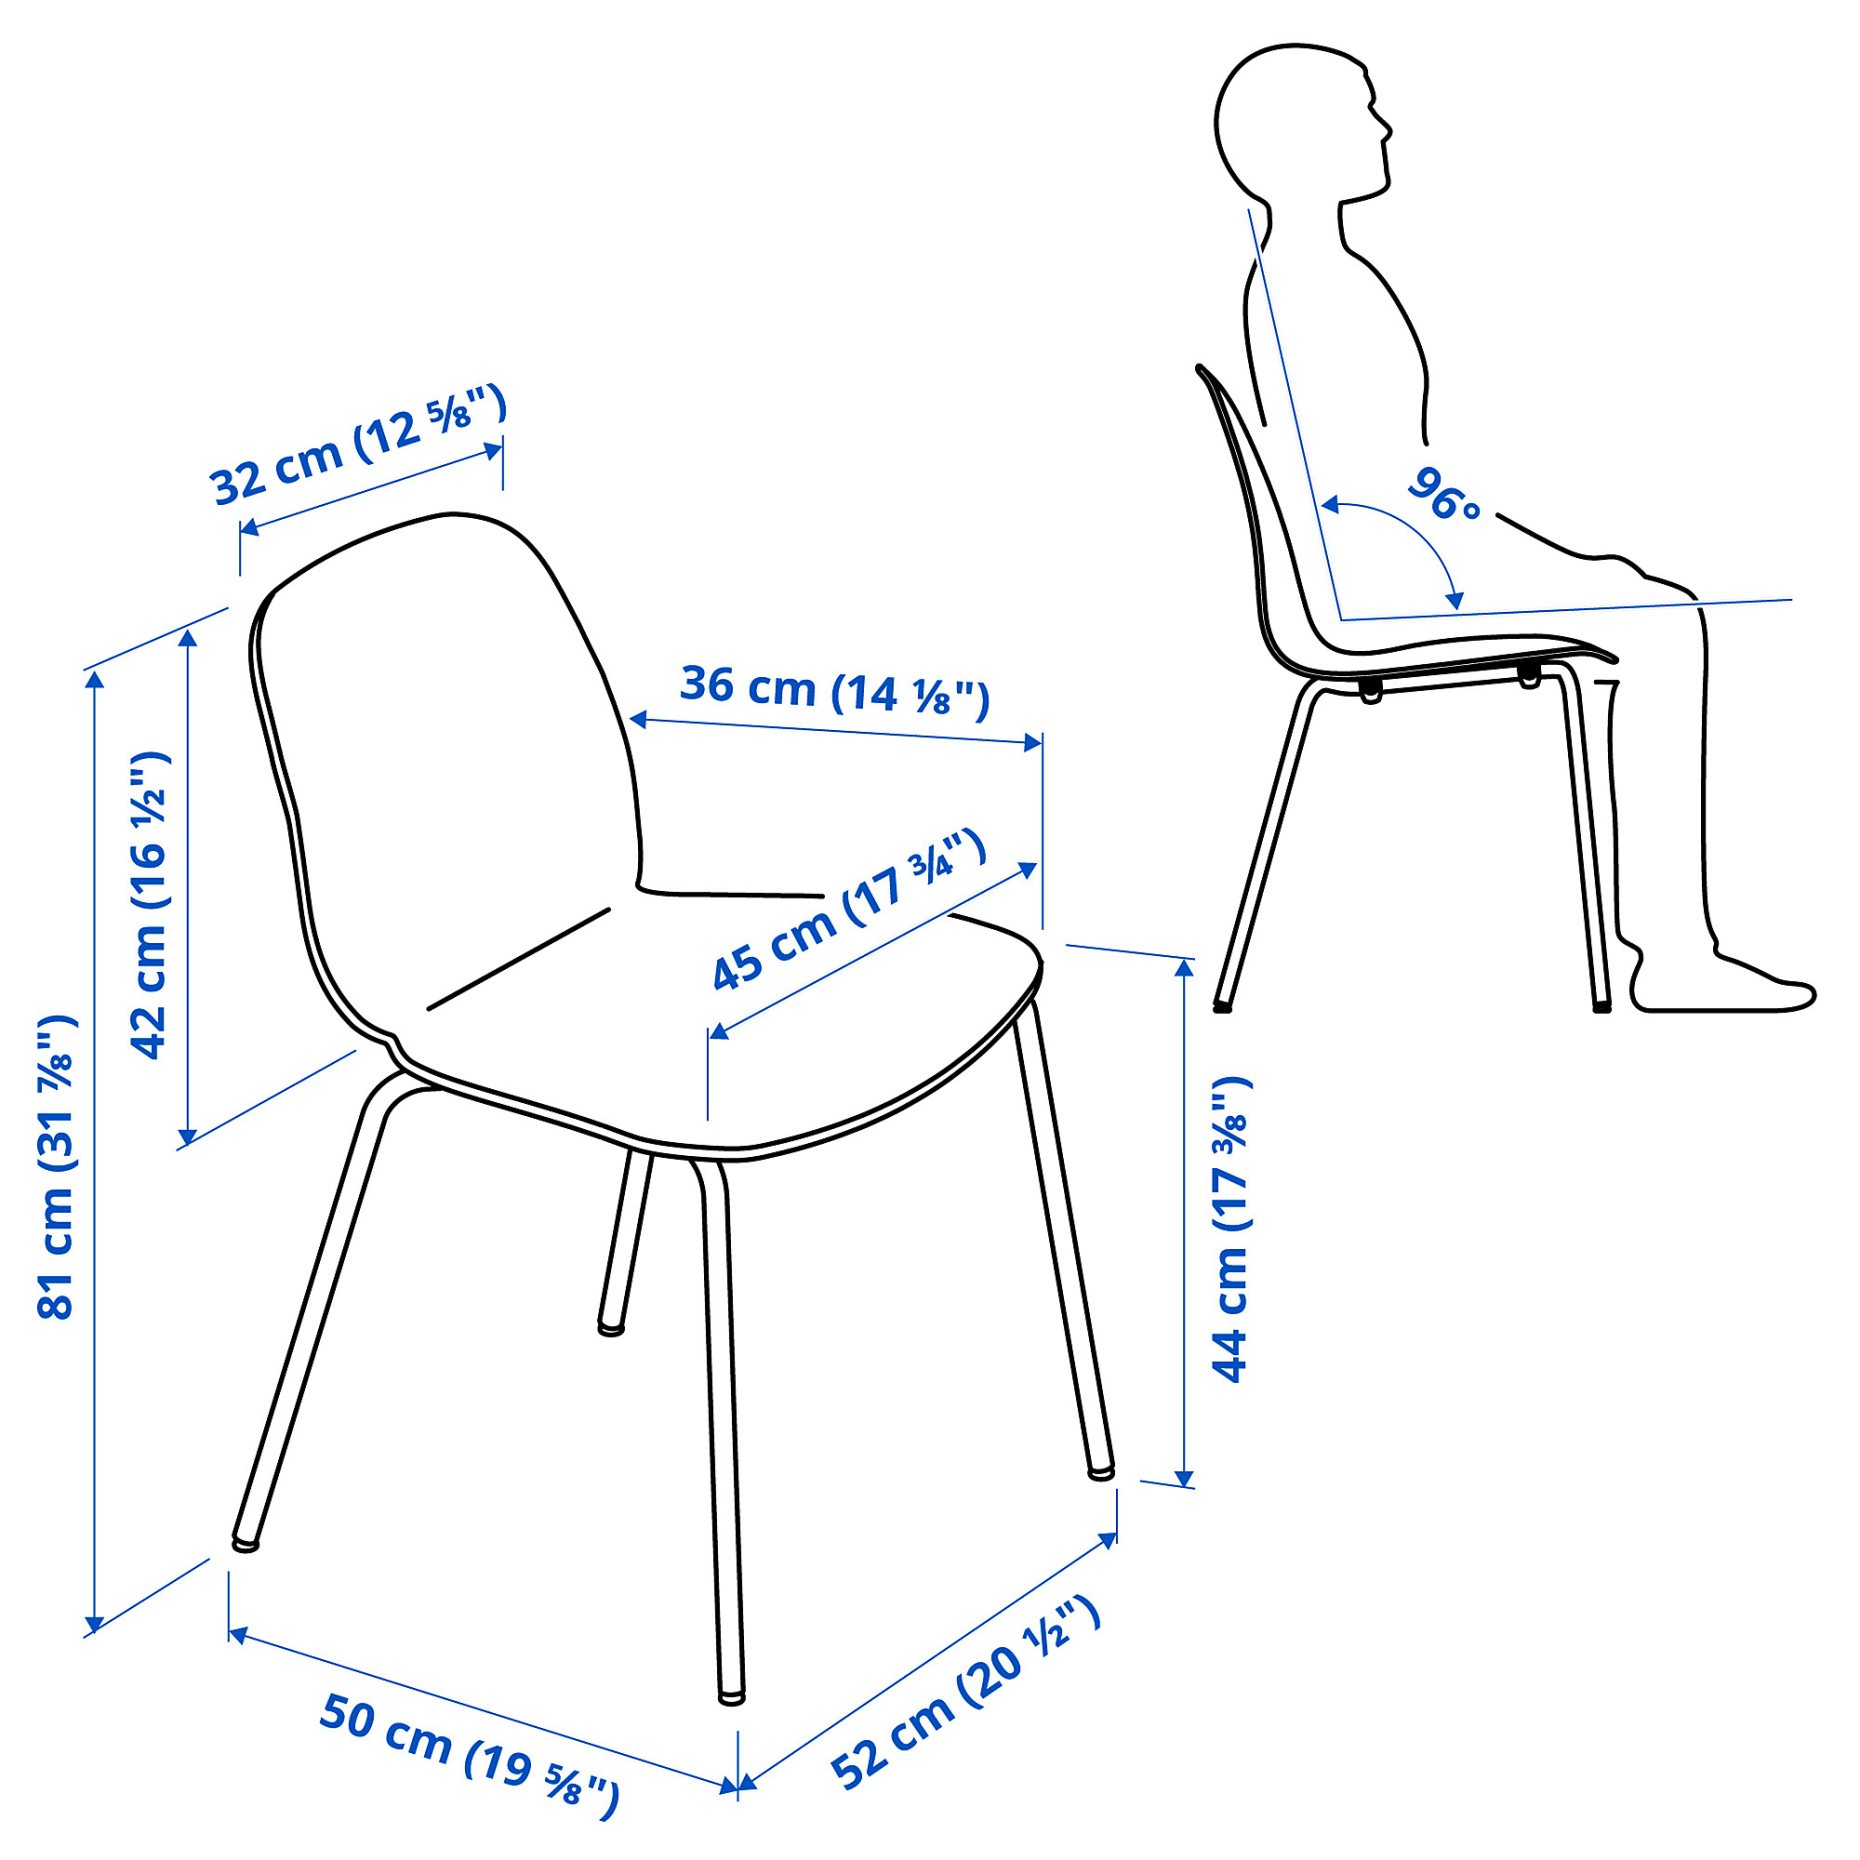 SANDSBERG/LIDAS, τραπέζι και 4 καρέκλες, 110x67 cm, 095.090.51